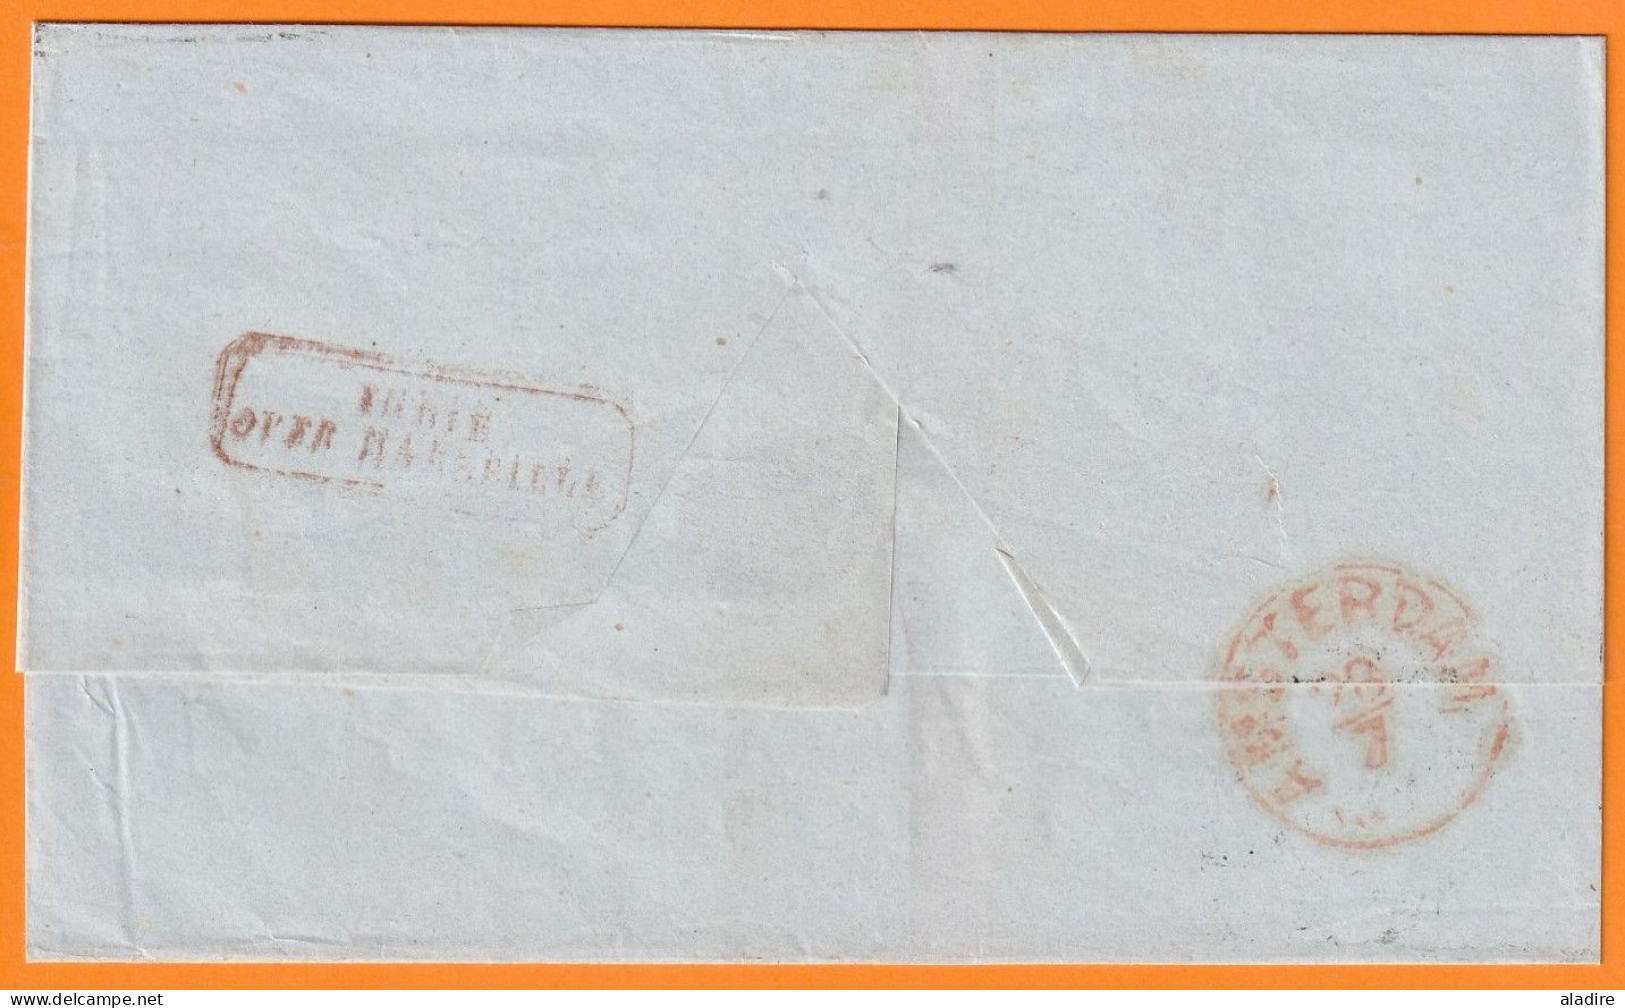 1854 - Folded Cover From SAMARANG, Semarang, Java To AMSTERDAM, Netherland Via MARSEILLE, France - Tax 120 ! - Niederländisch-Indien